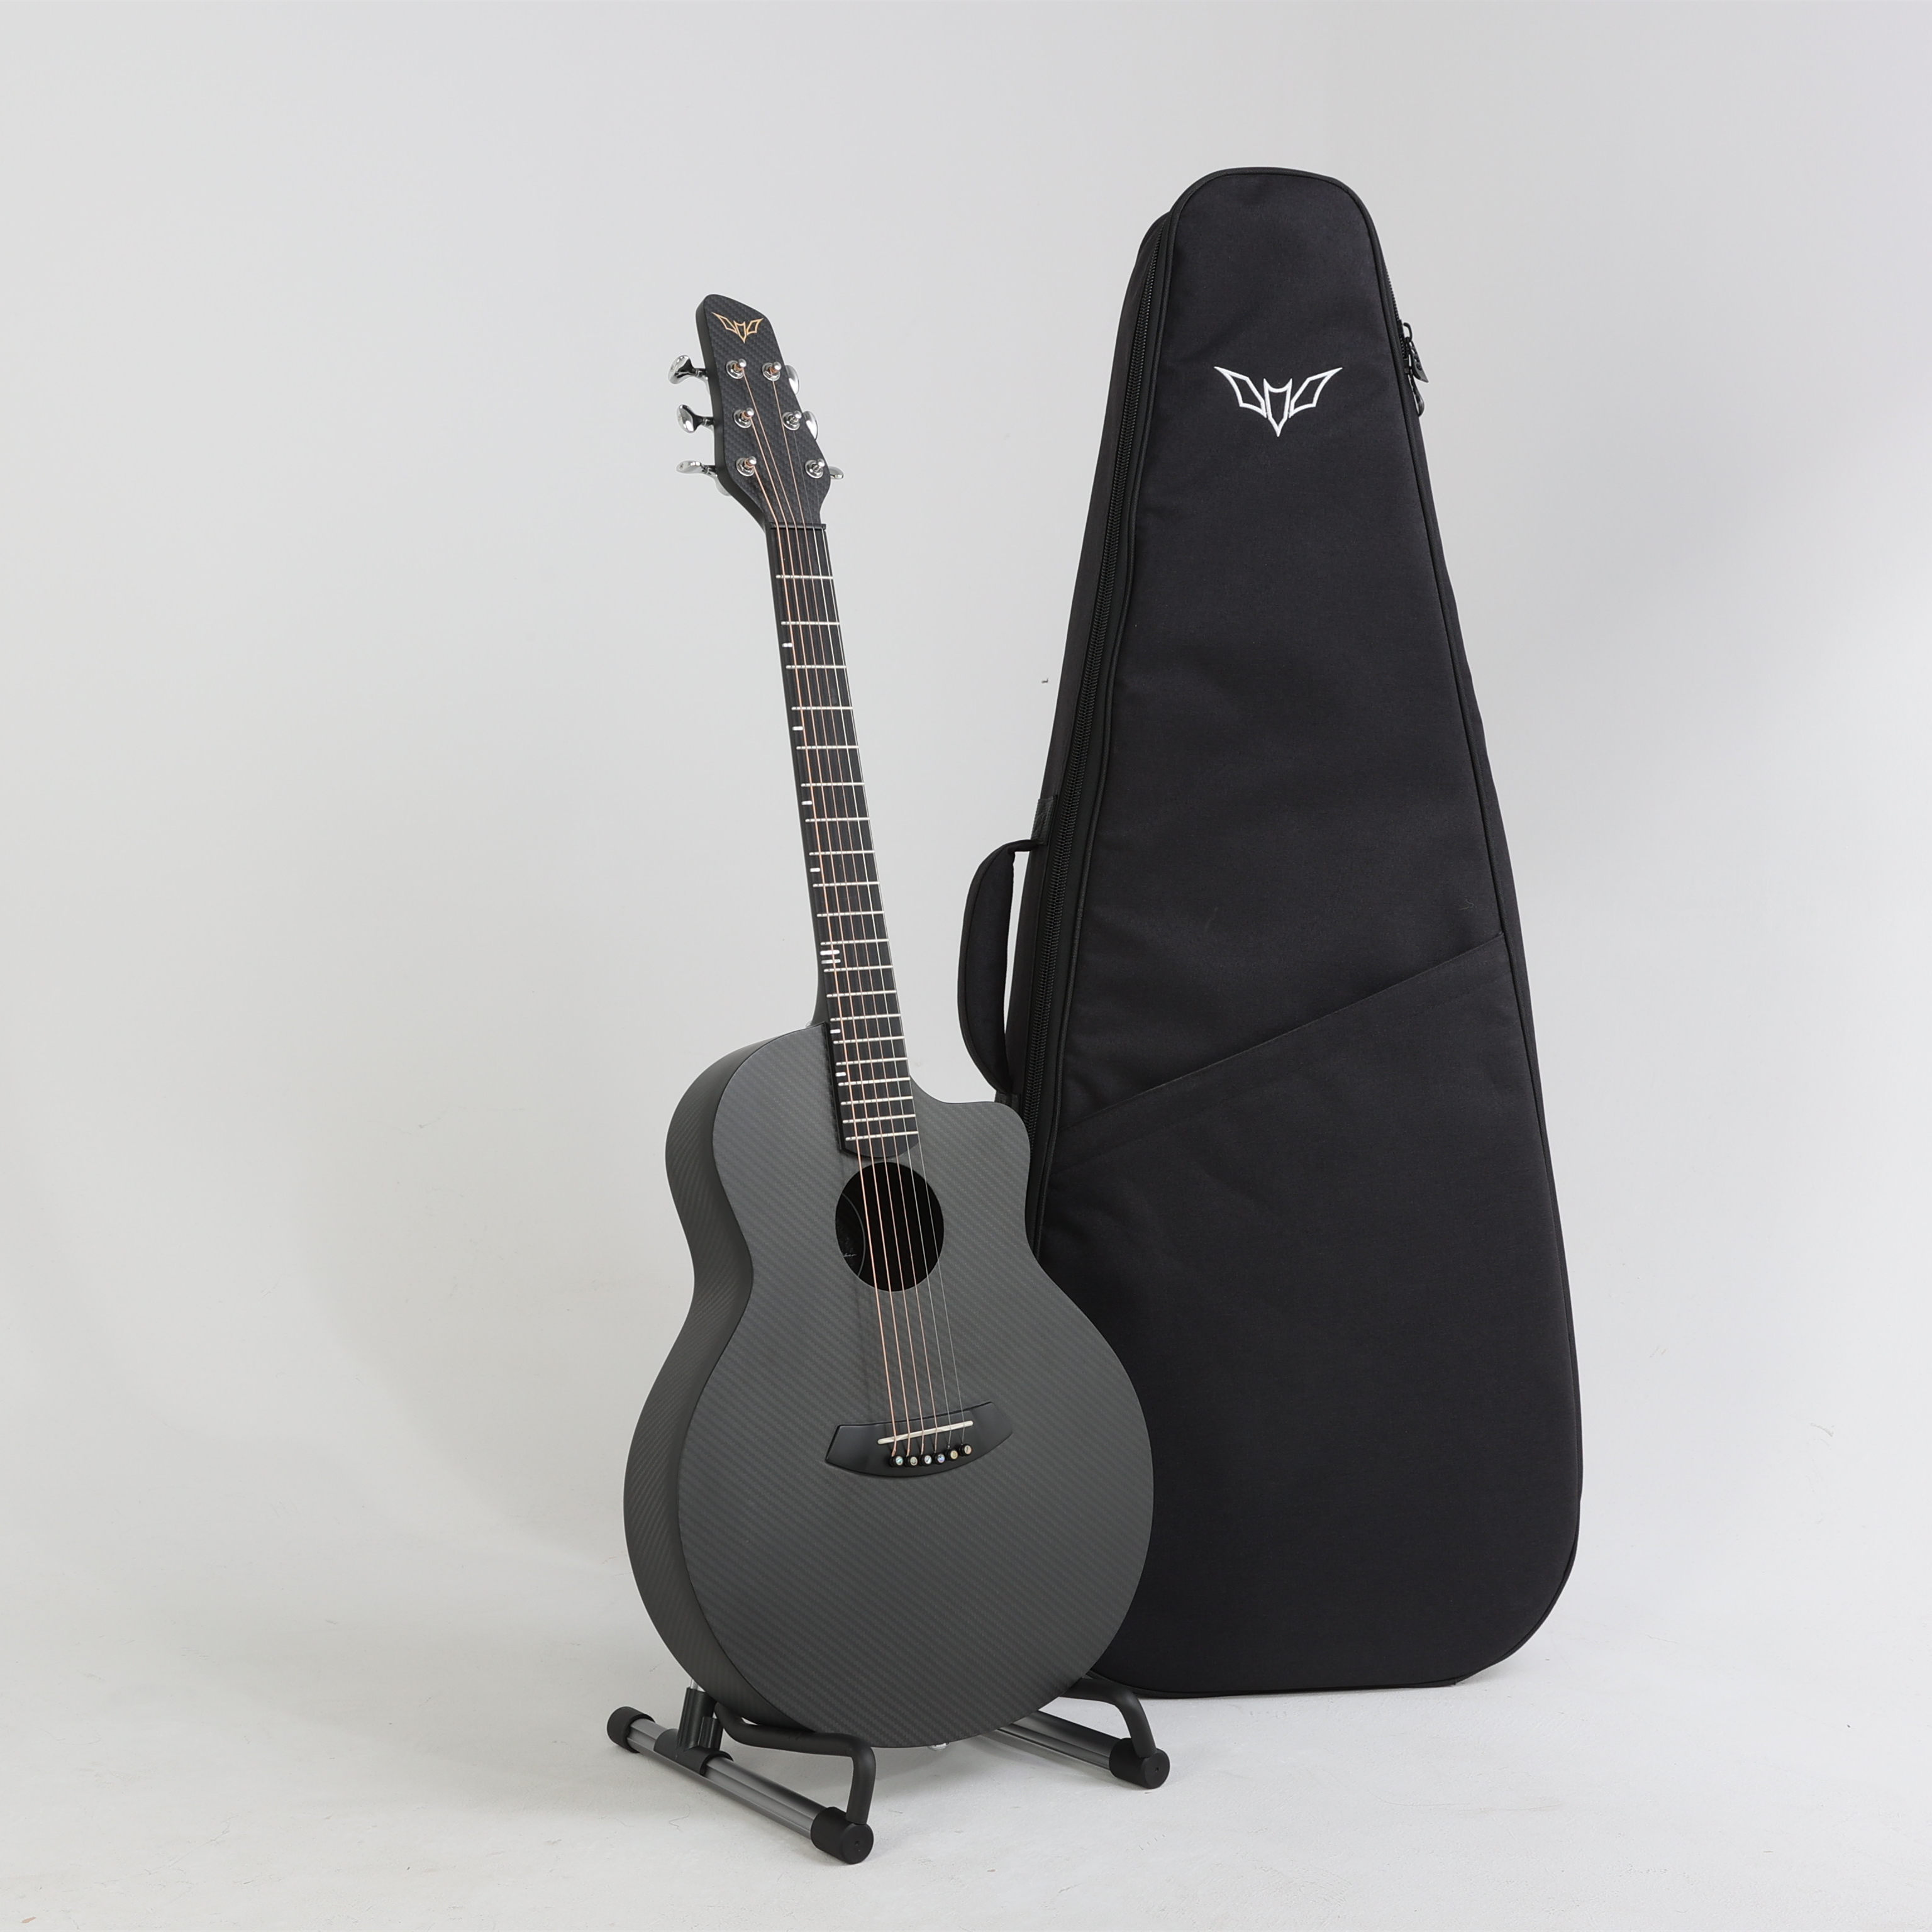 Real carbon fiber guitar 38